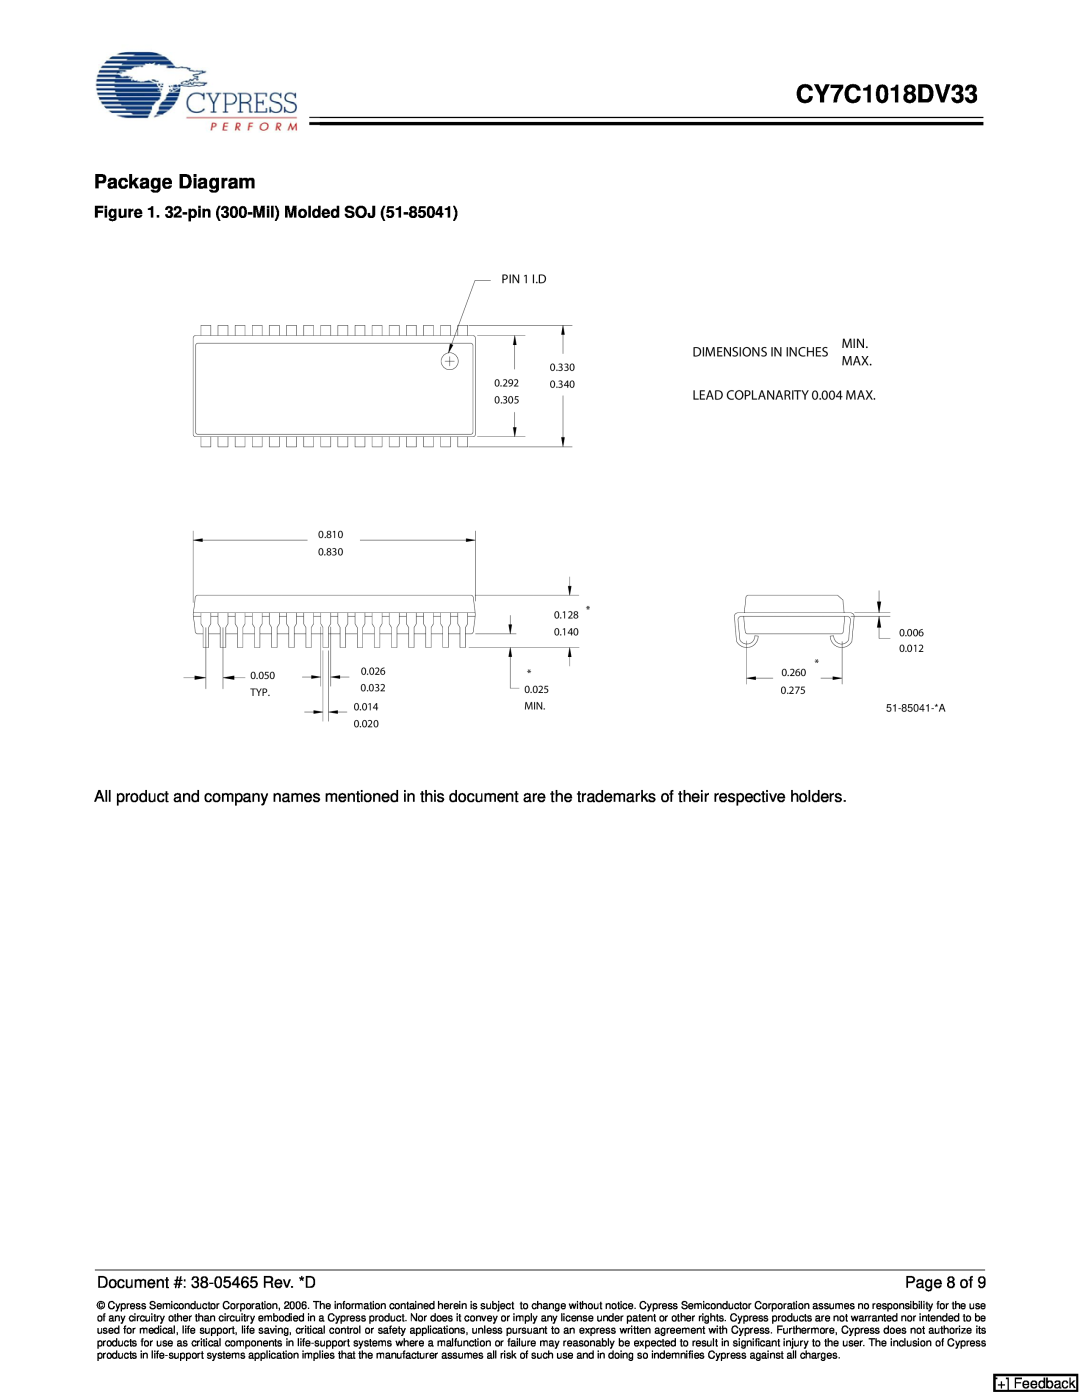 Cypress CY7C1018DV33 manual Package Diagram, 32-pin 300-Mil Molded SOJ, + Feedback, PIN 1 I.D 